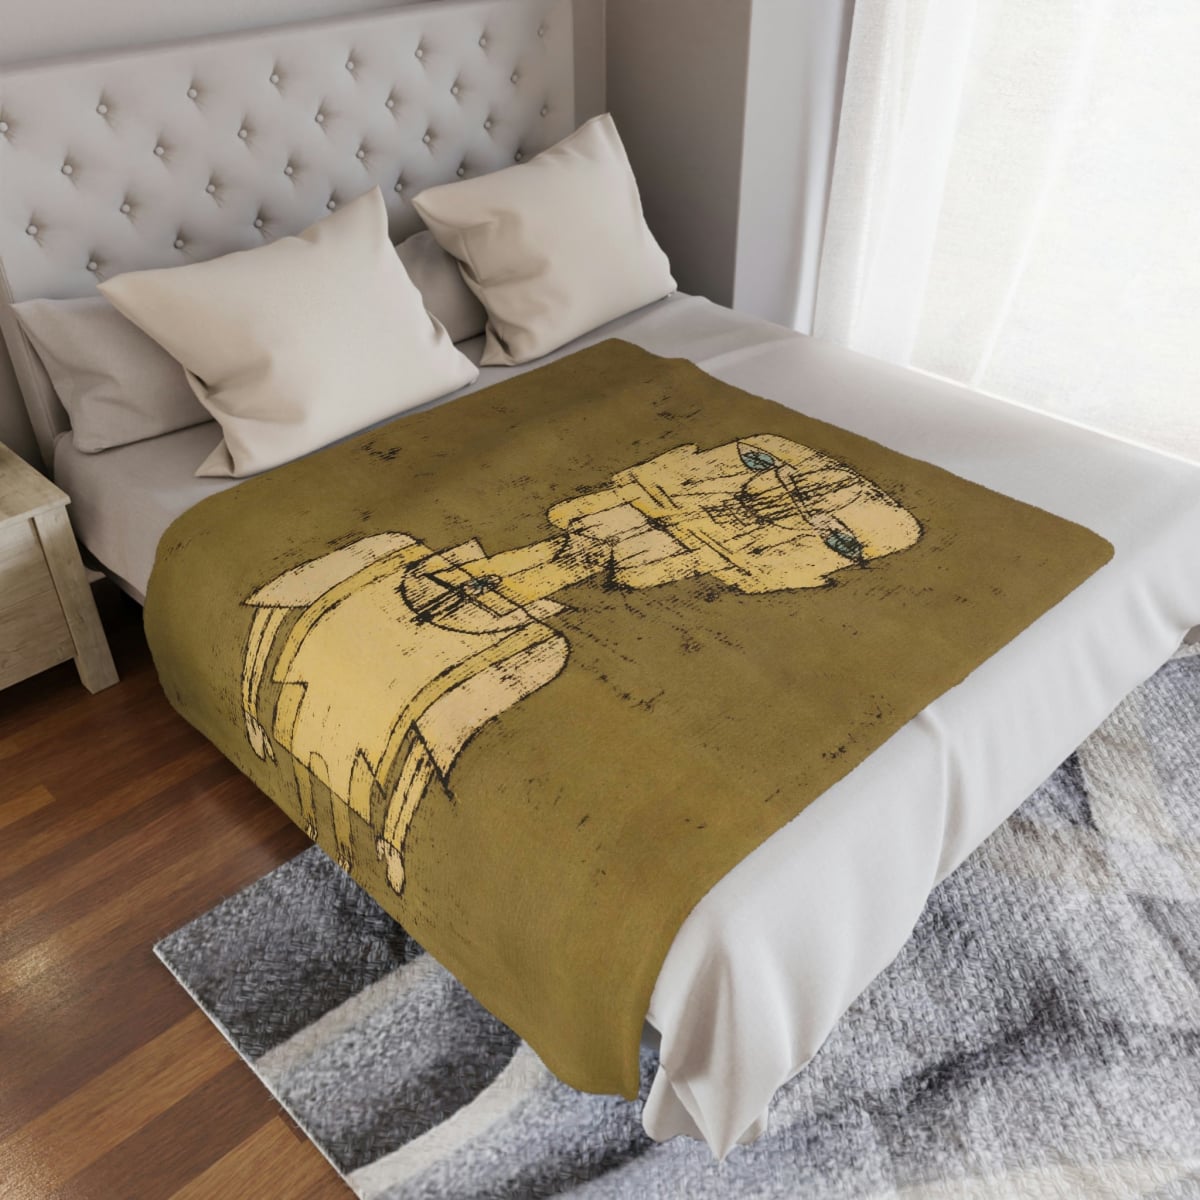 Premium Quality Klee Art Blanket